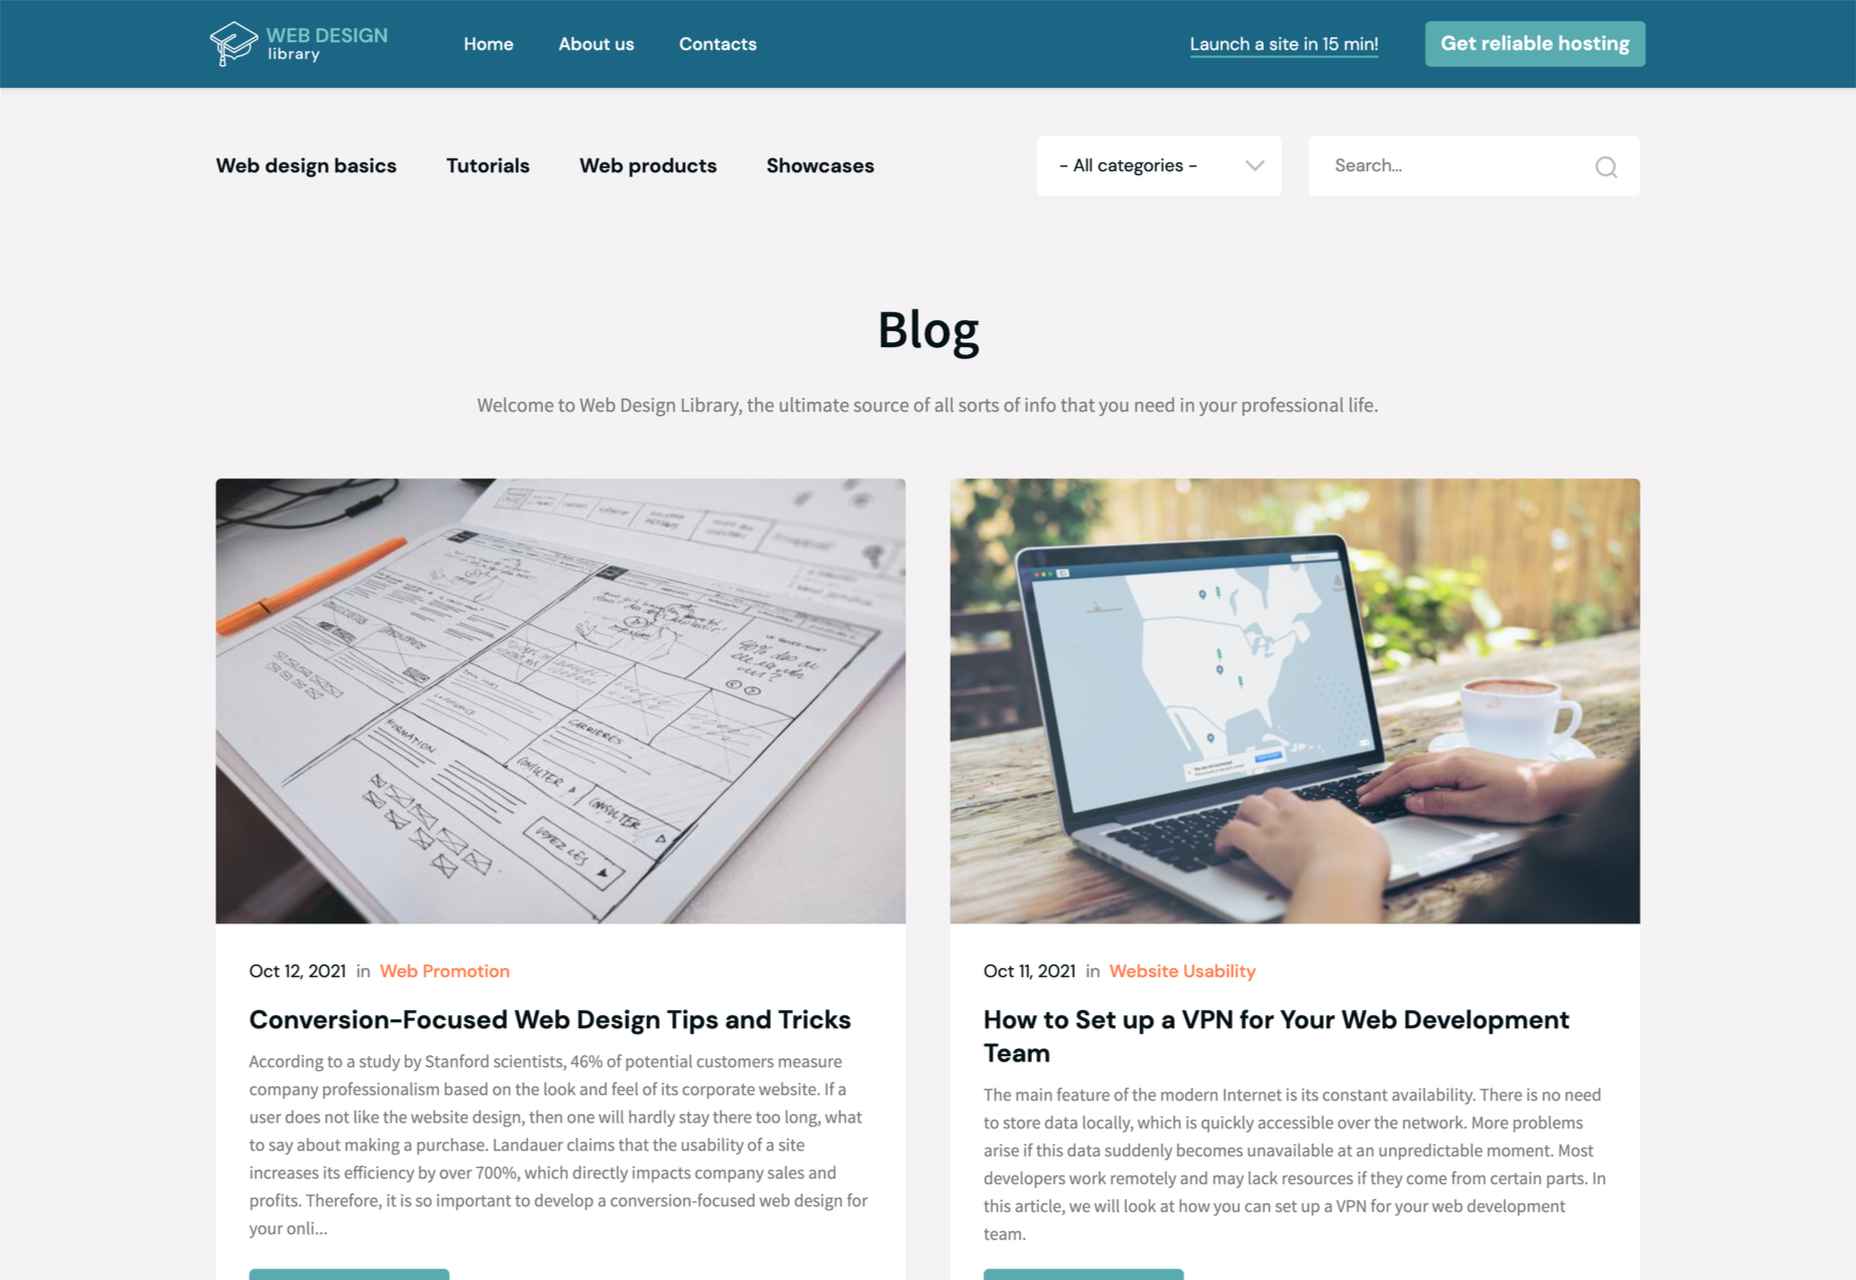 web design blog